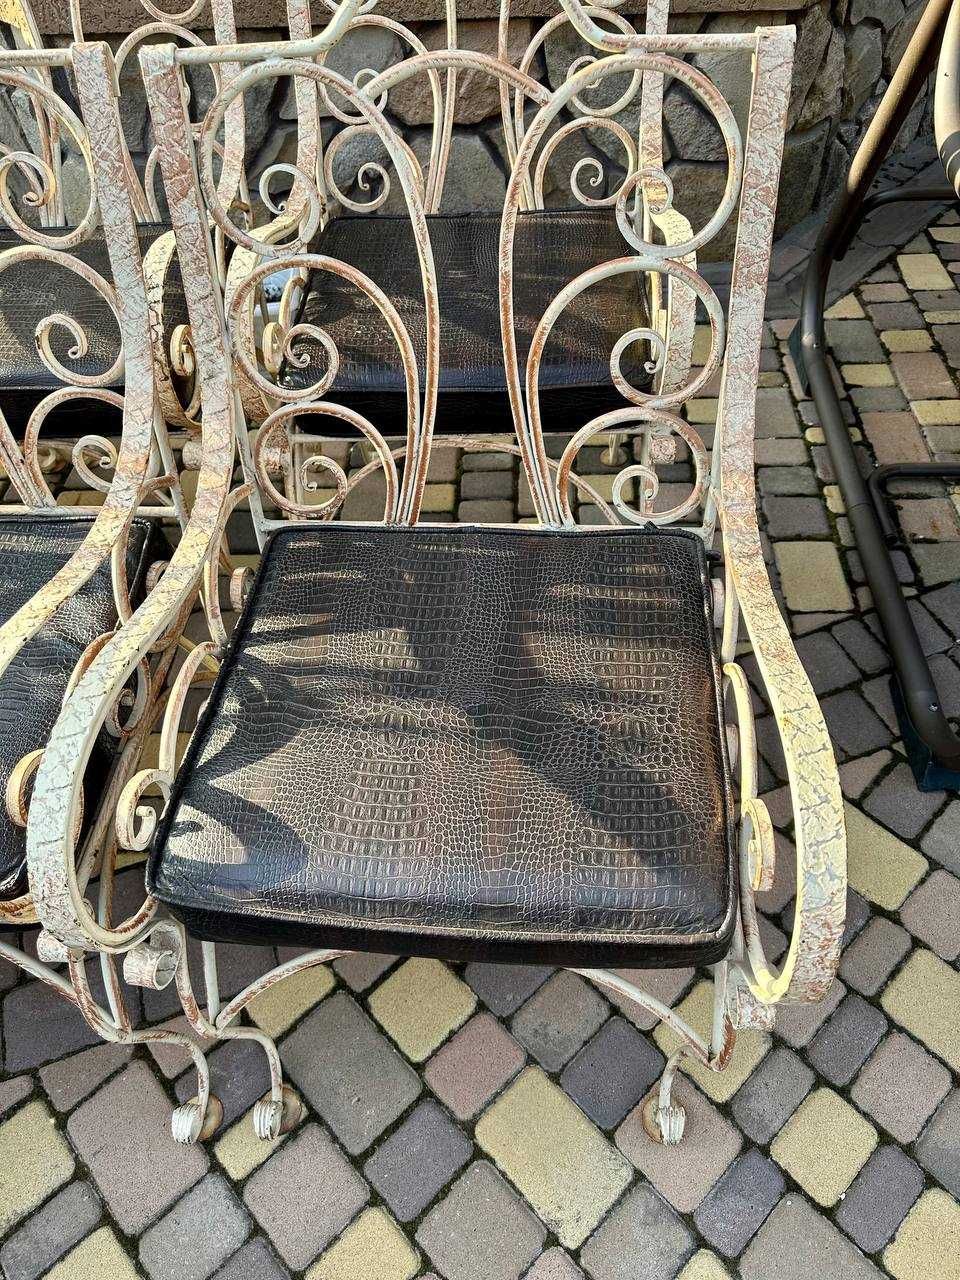 Кресло коване для альтанки